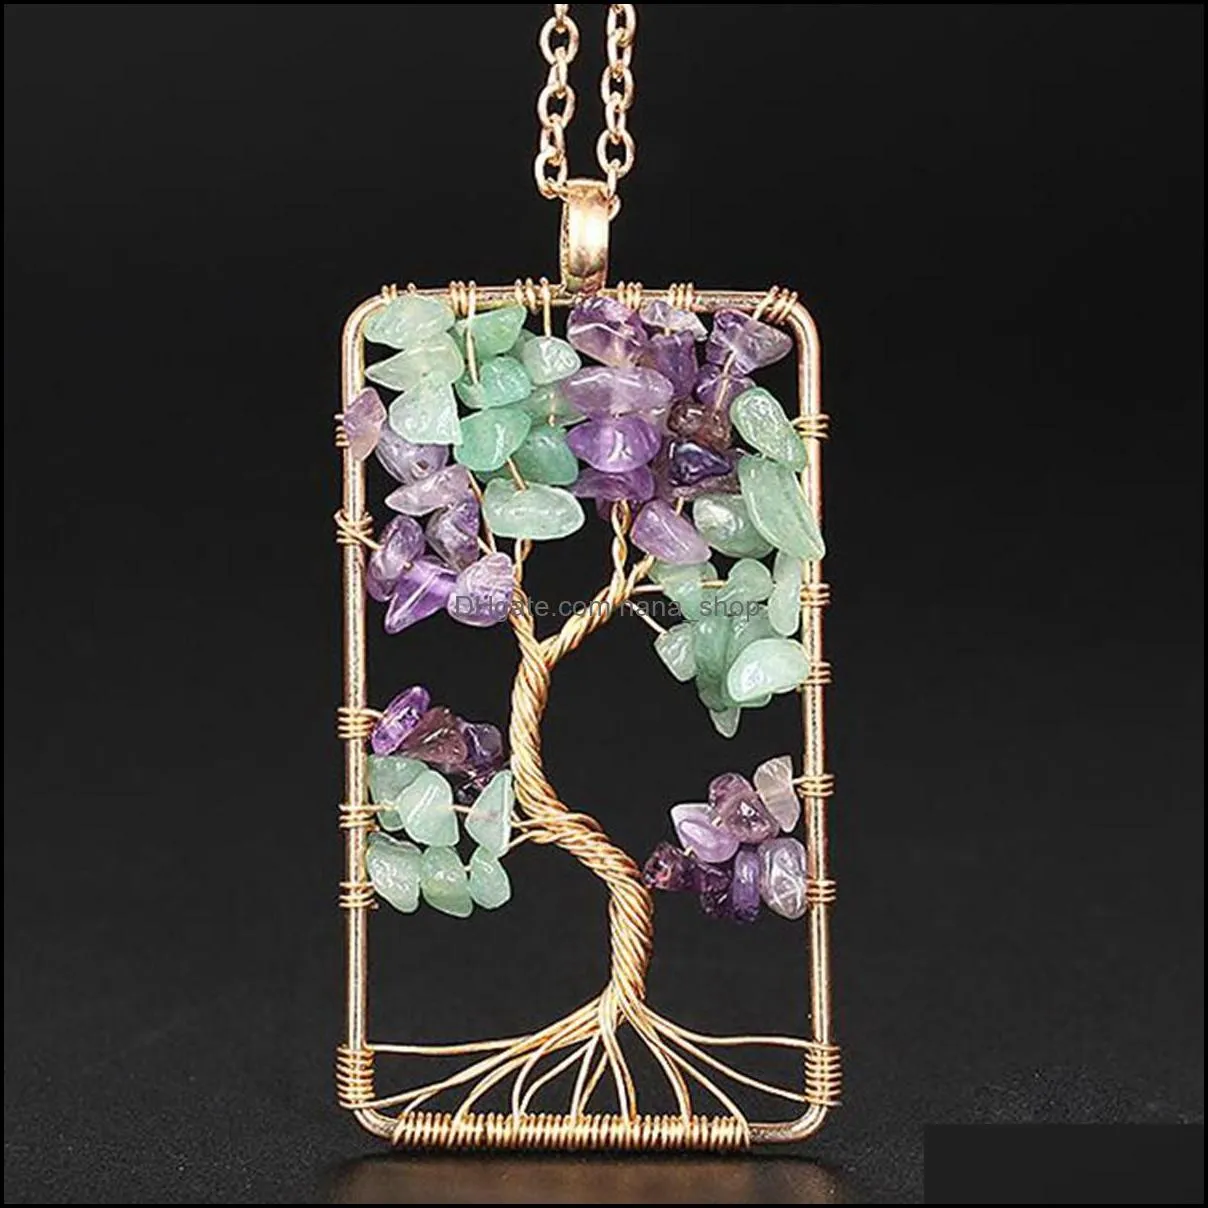 rectangle winding tree of life pendant necklace handmade amethystaddgreen aventurine stones chakra jewelry for women and men